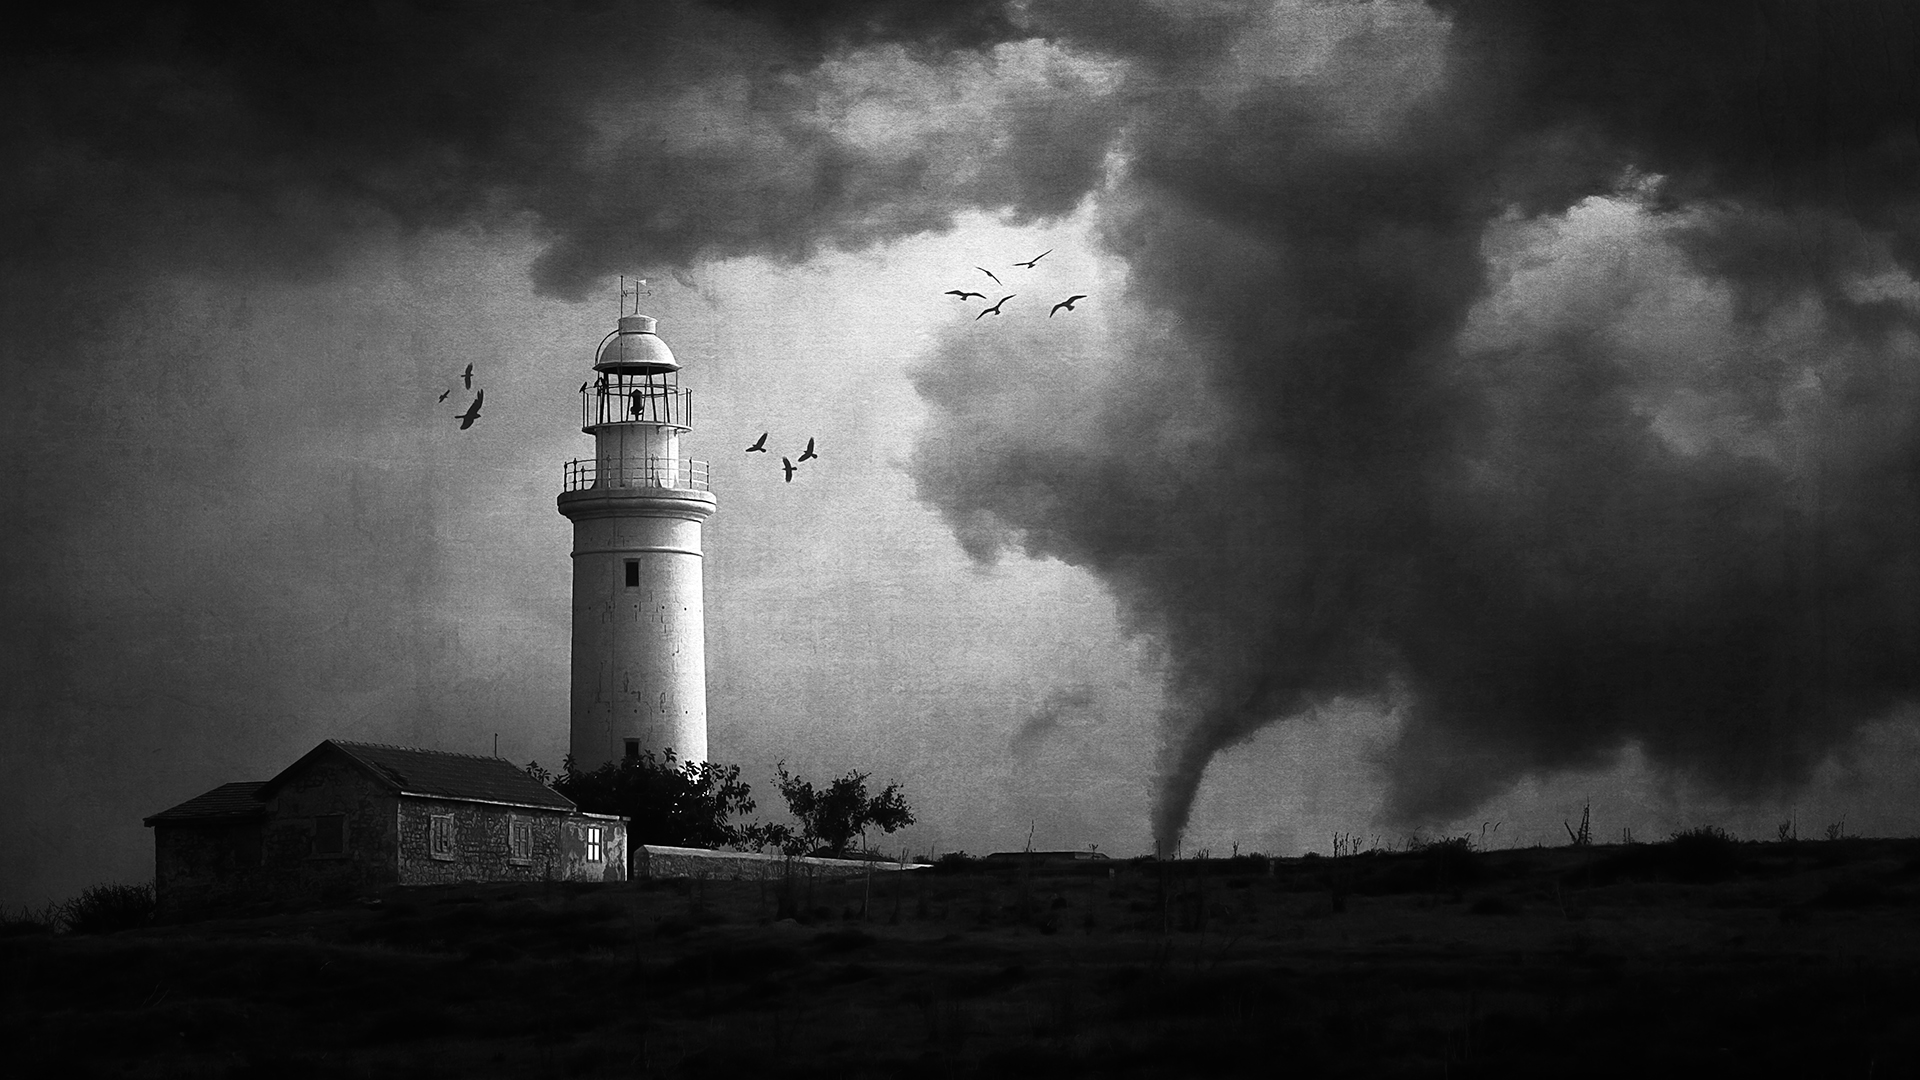 Storm coming (Mikael Lundblad)